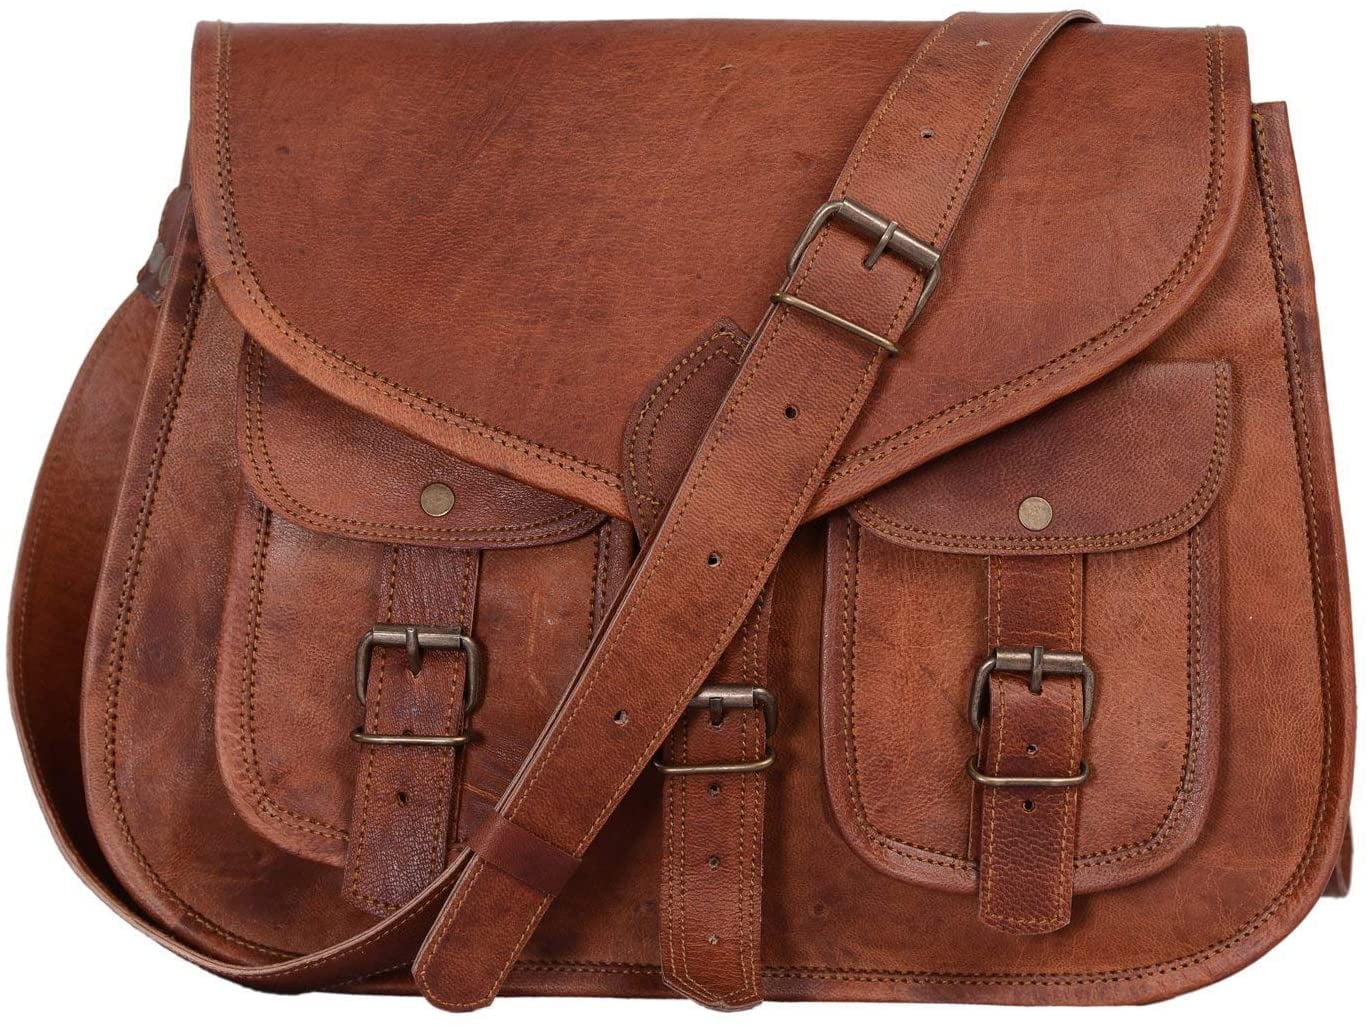 Bags & Purses Luggage & Travel Overnight Bags Women's Handbag from Full Grain Leather Carryall Bag Vintage Styled Leather Bag. Shoulder Bag for Women Large Bag for Women 